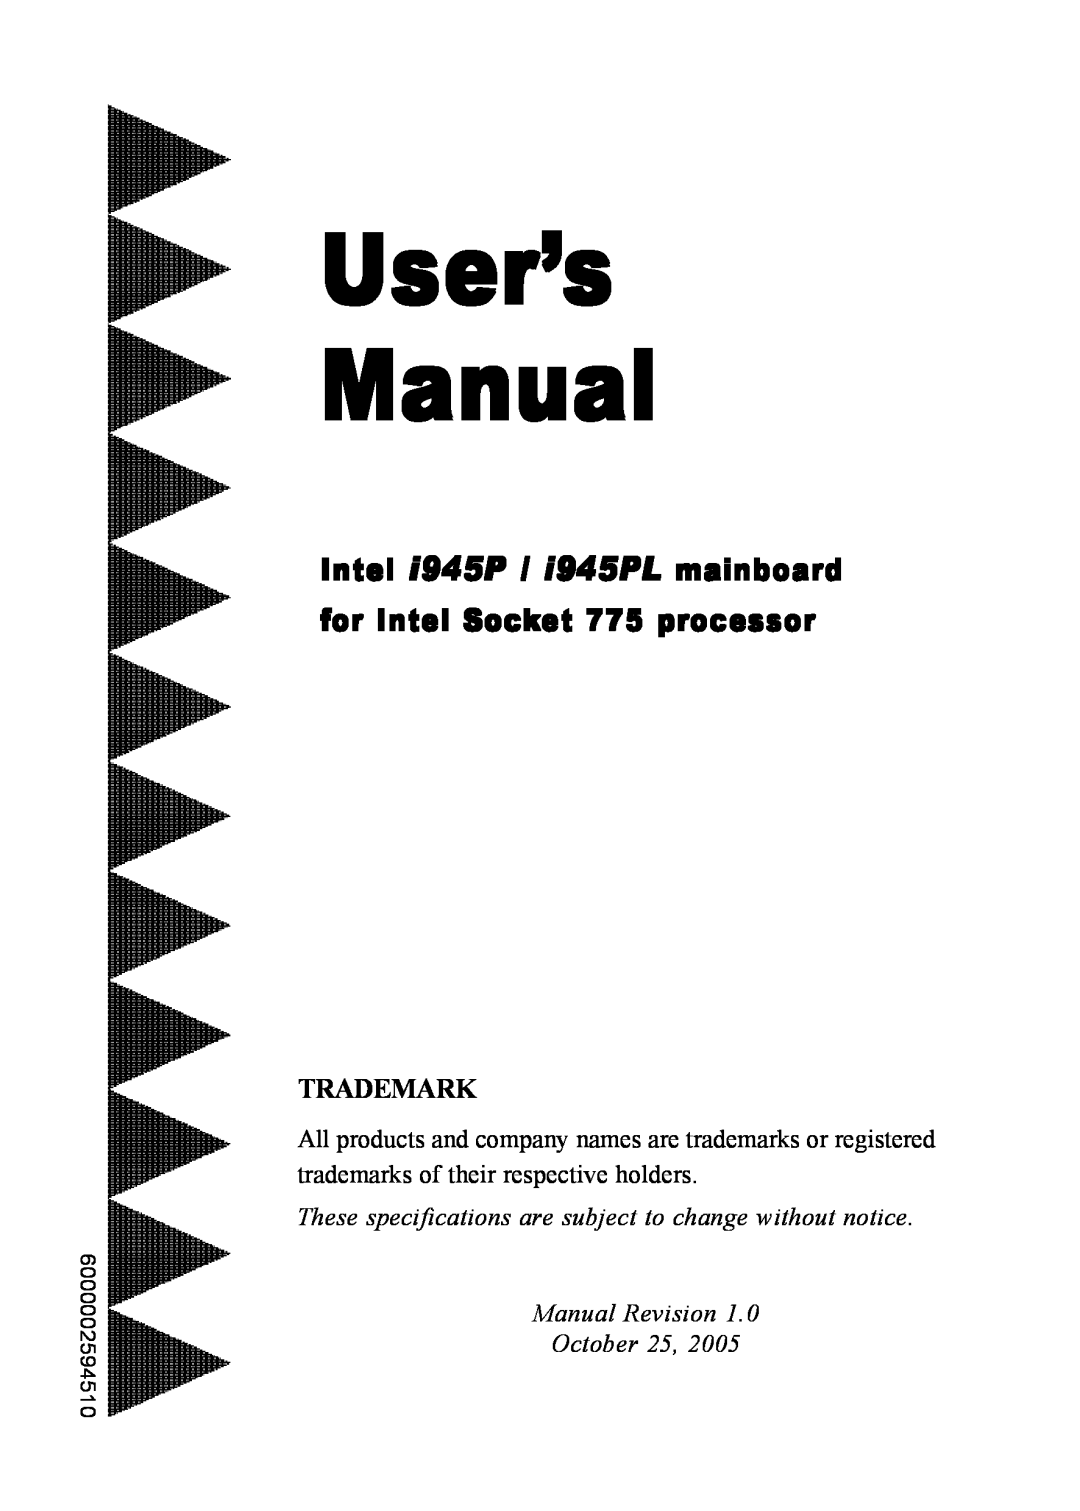 Intel I945P specifications Manual Revision October, User’s, Trademark, 6000002594510 